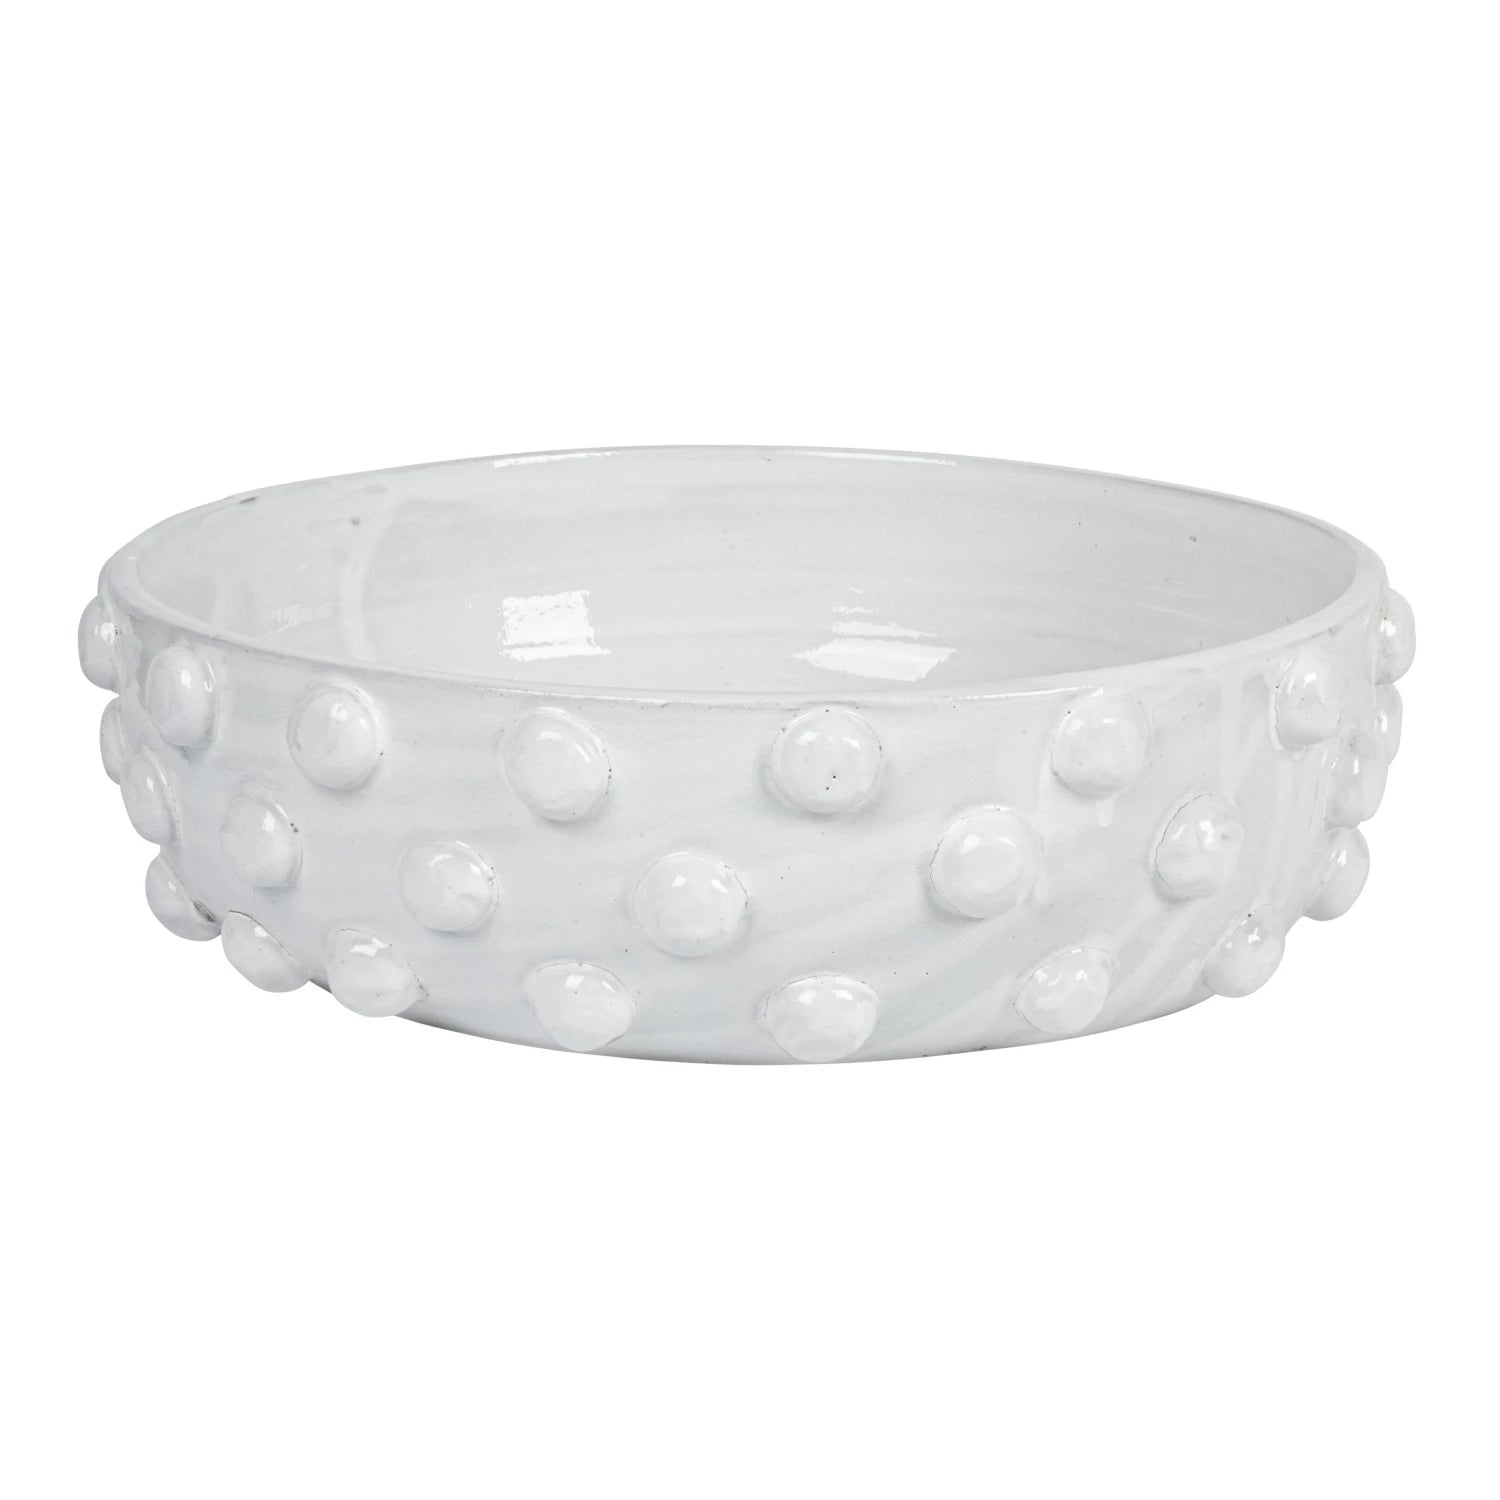 Decorative Terra-cotta Bowl with Raised Dots, White